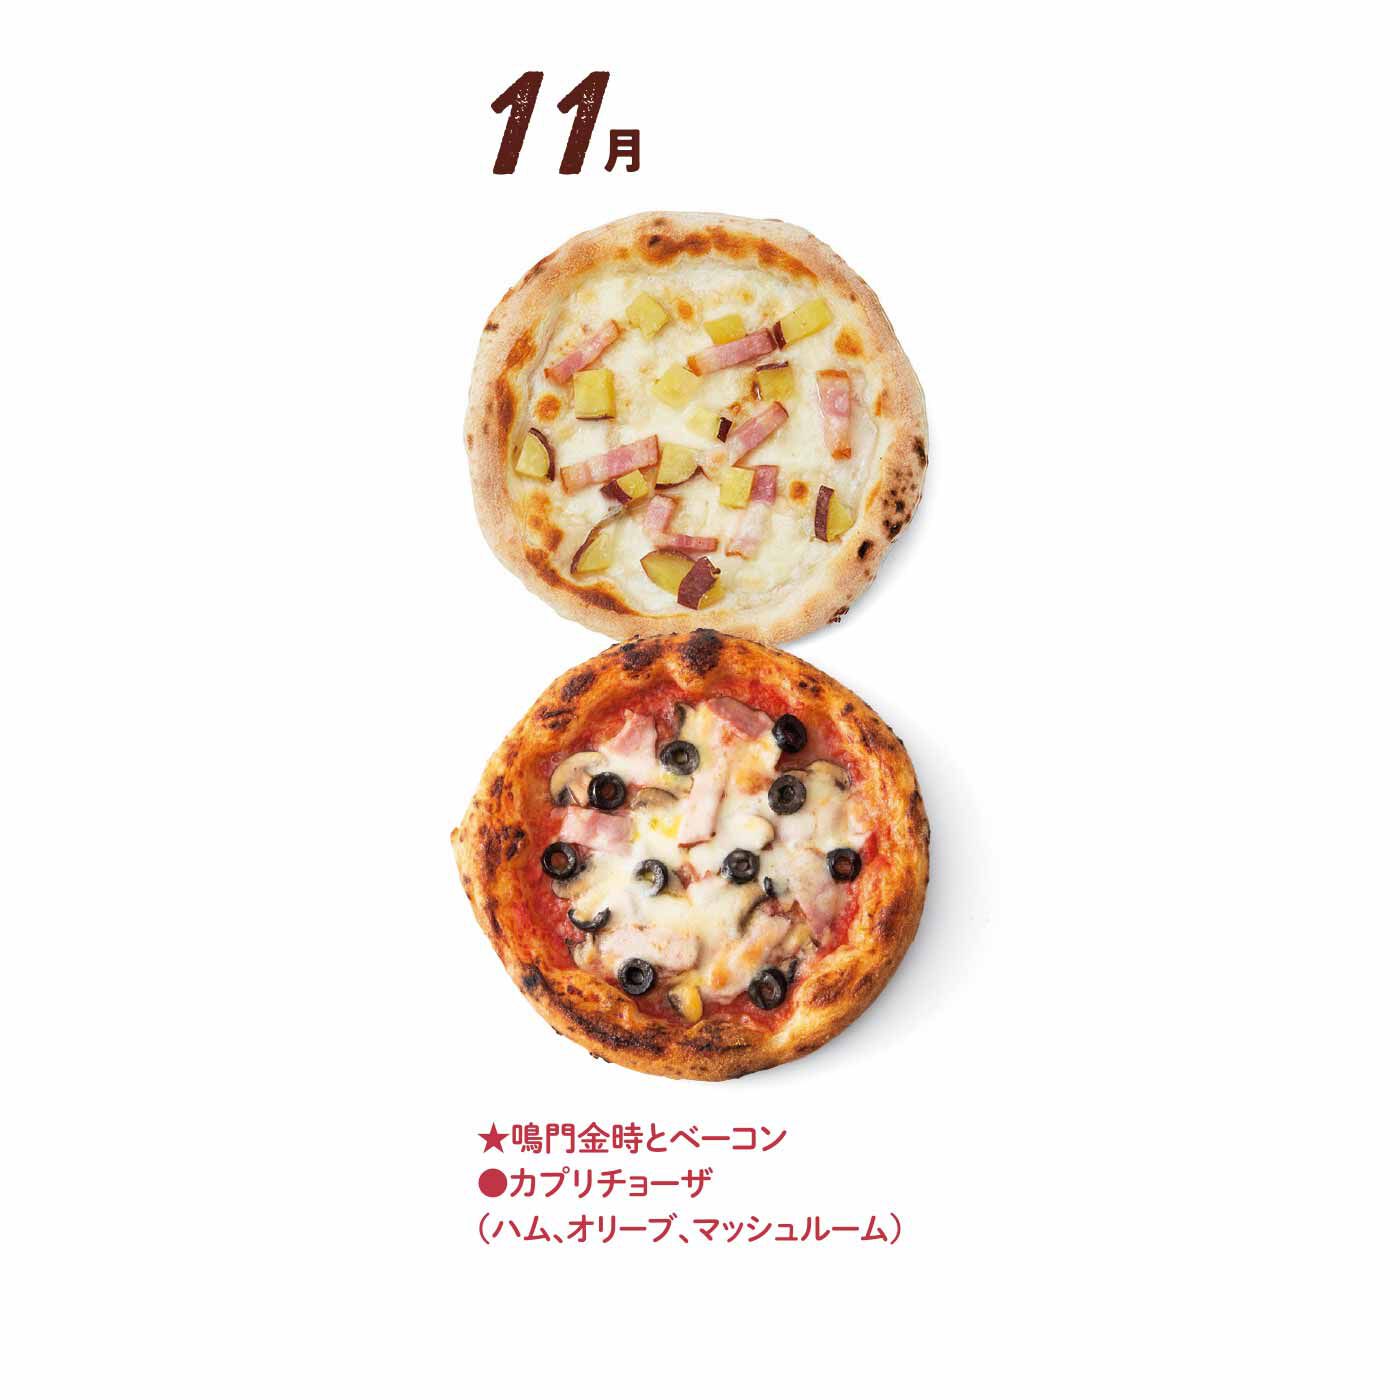 FP産地直送マルシェ|【締切 6/5】塩屋で人気の「ピザ・アキラッチ」 地元の素材を生かした窯焼きピザ12ヵ月コース